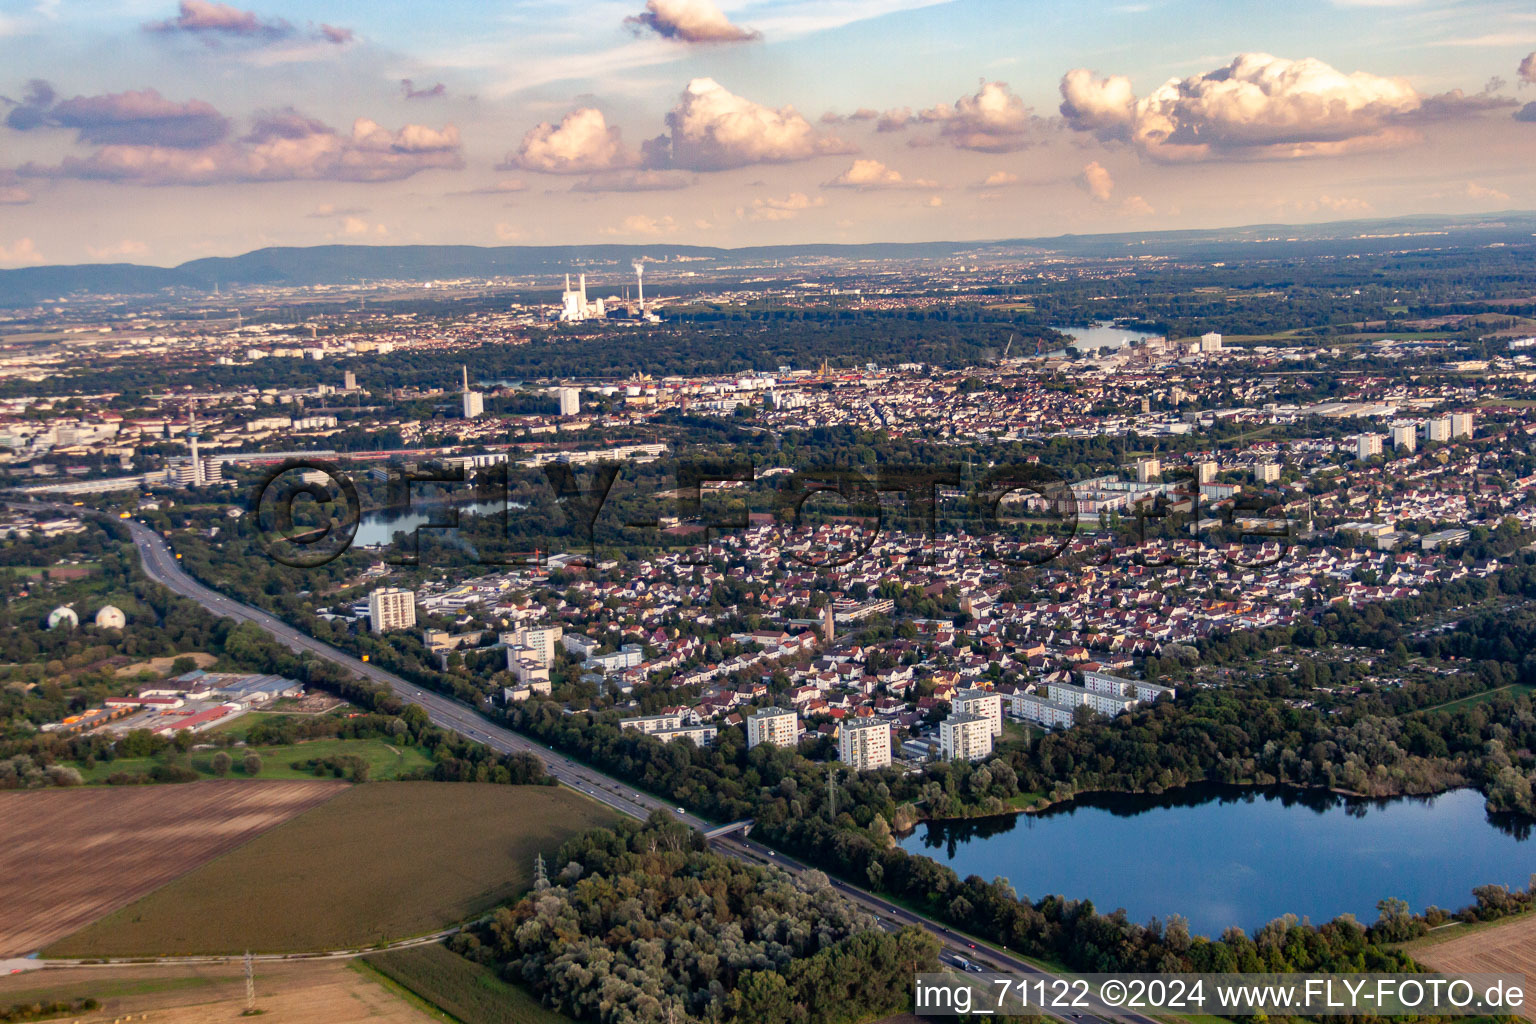 Aerial view of Behind the Holschen pond in the district Gartenstadt in Ludwigshafen am Rhein in the state Rhineland-Palatinate, Germany